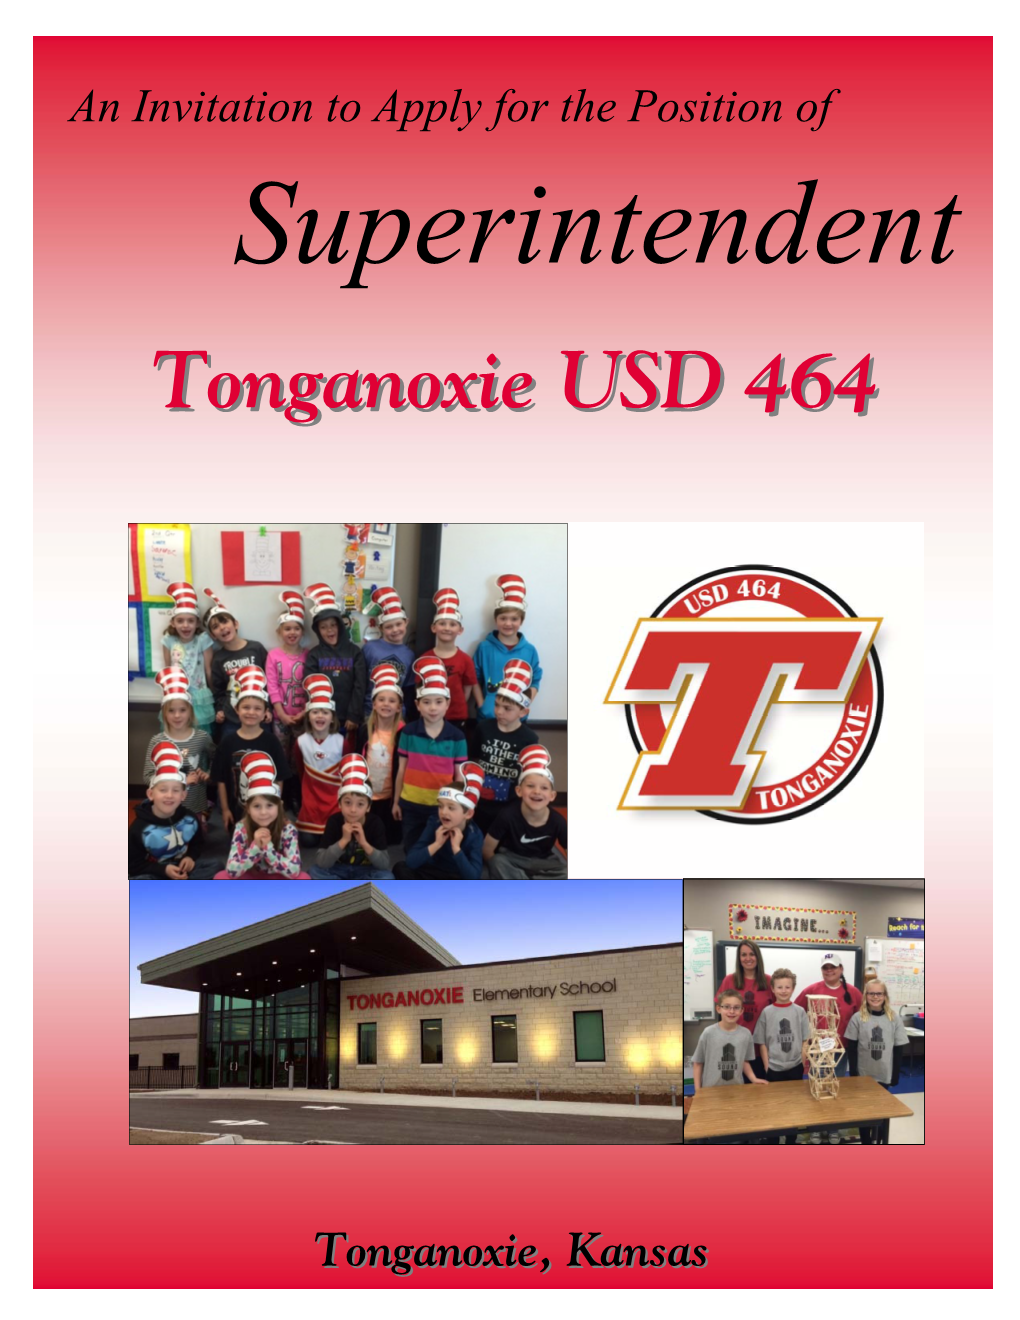 Tonganoxie USDUSD 464464